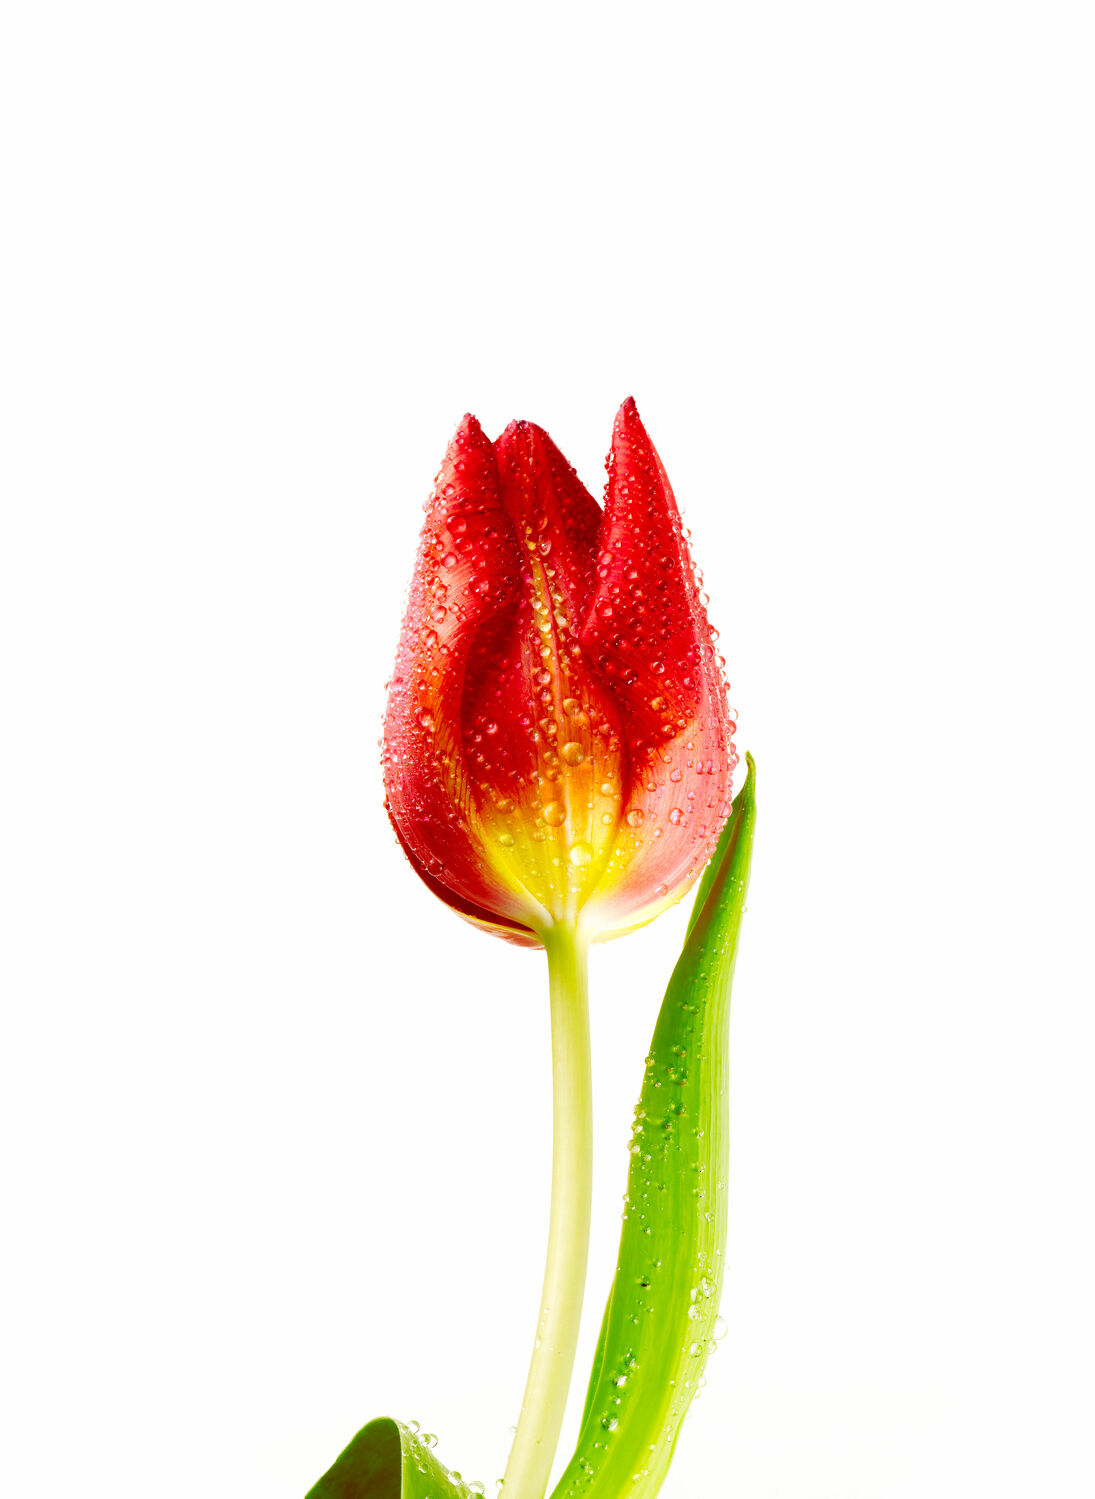 Bild mit Blume, Pflanze, Tulpe, Tulips, Tulpen, Tulipa, Tulip, rote Tulpe, red tulip